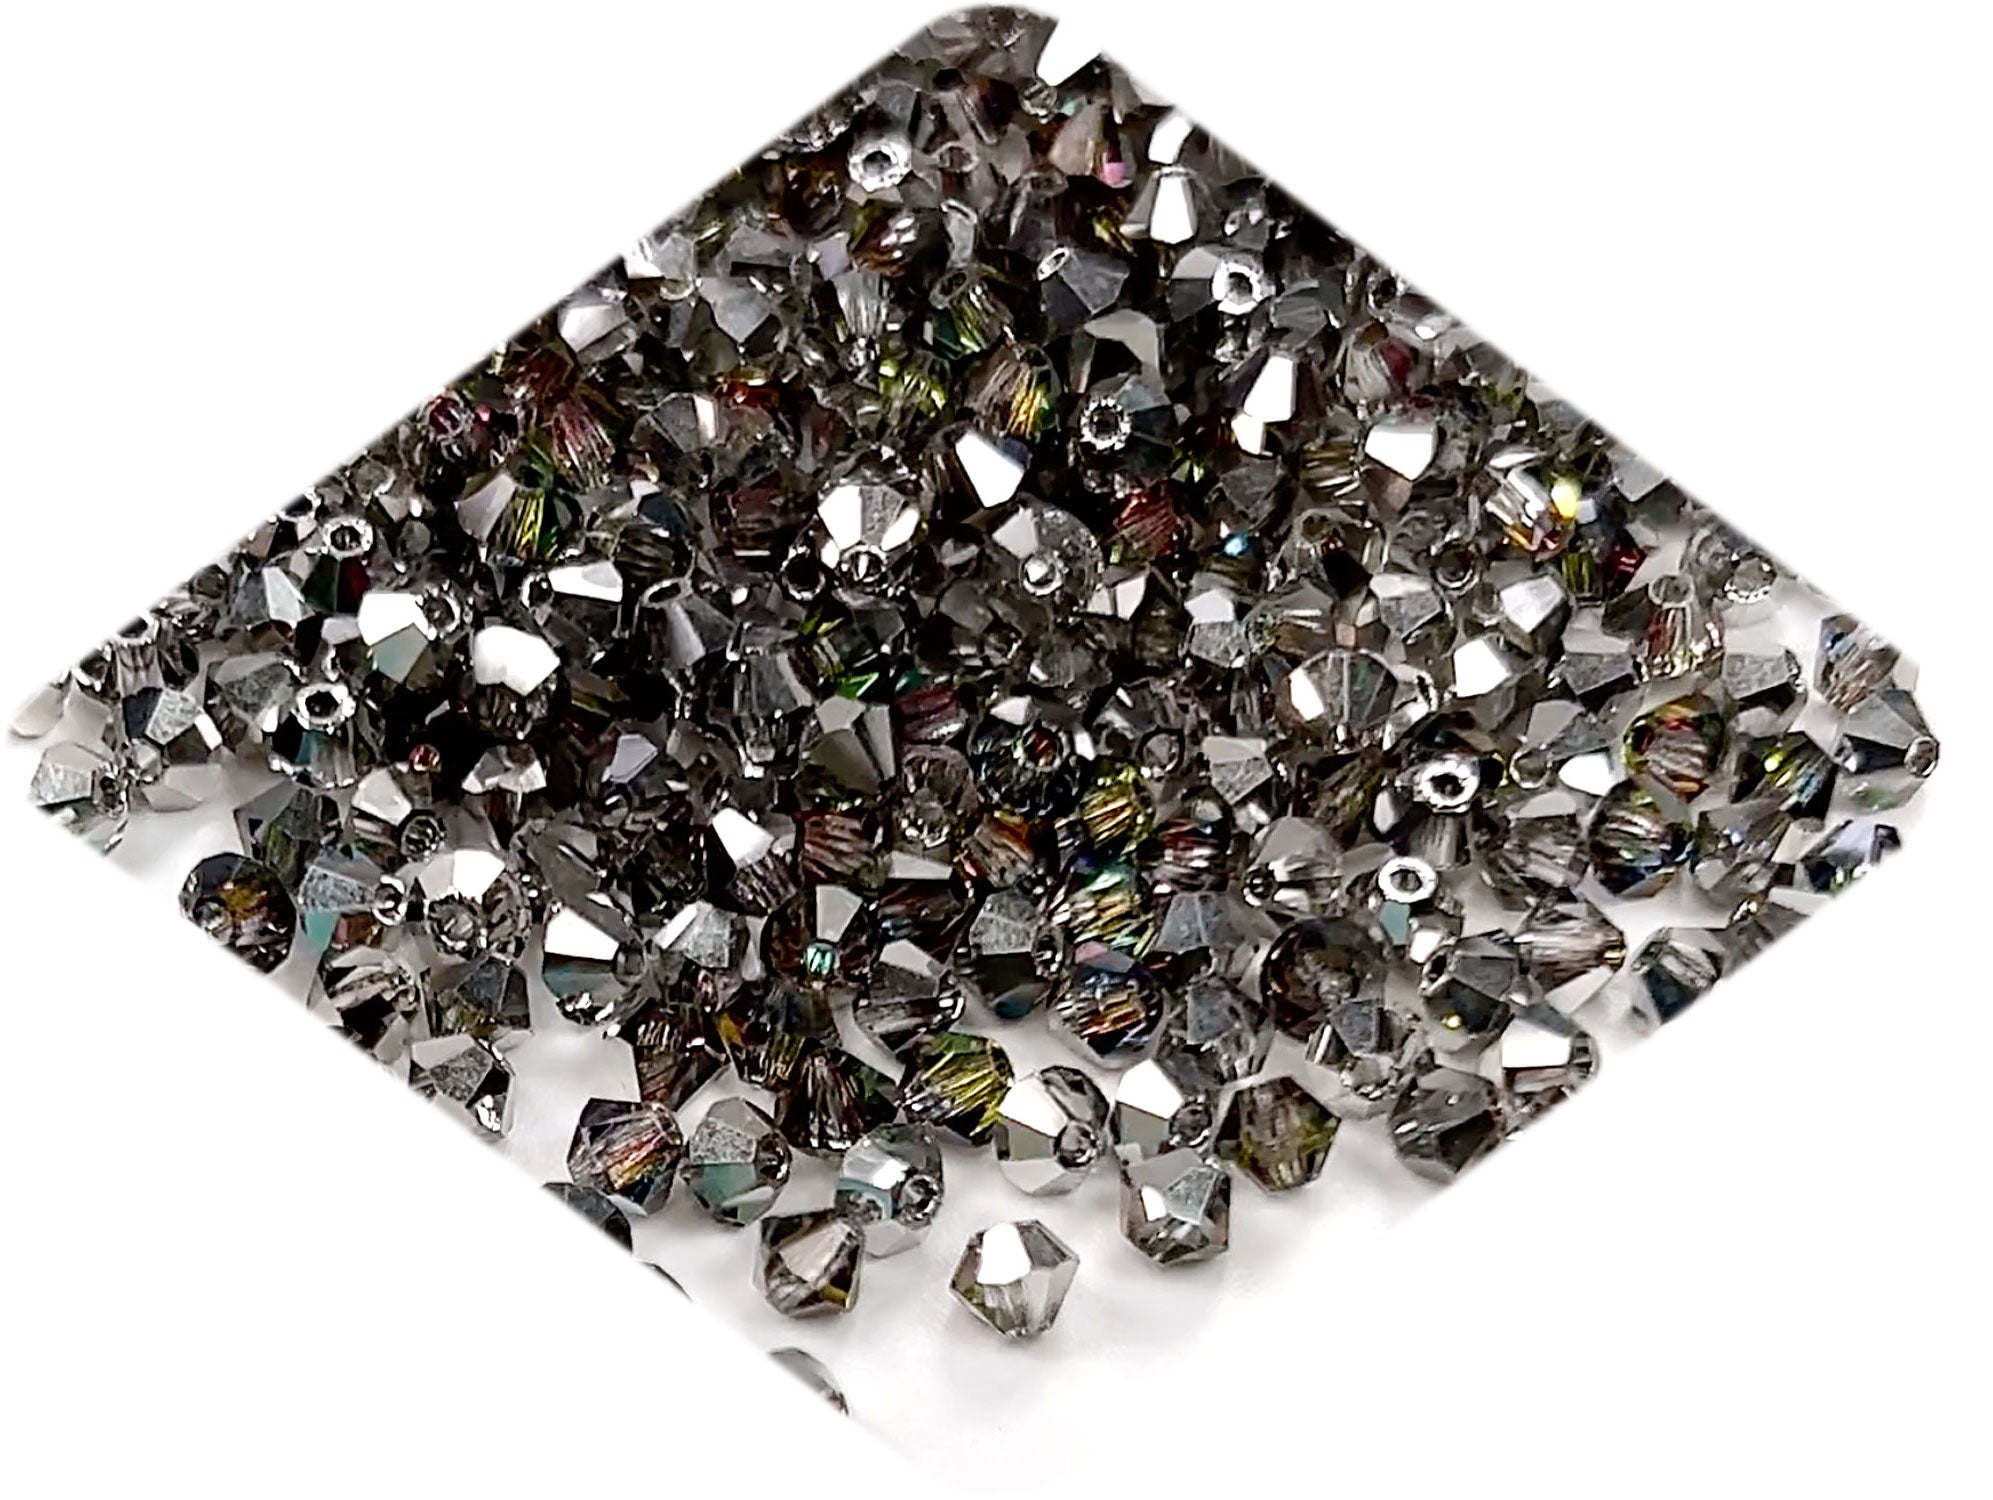 Crystal Vitrail, Czech Glass Beads, Machine Cut Bicones (MC Rondell, Diamond Shape), clear crystal coated with green vitrail medium metallic